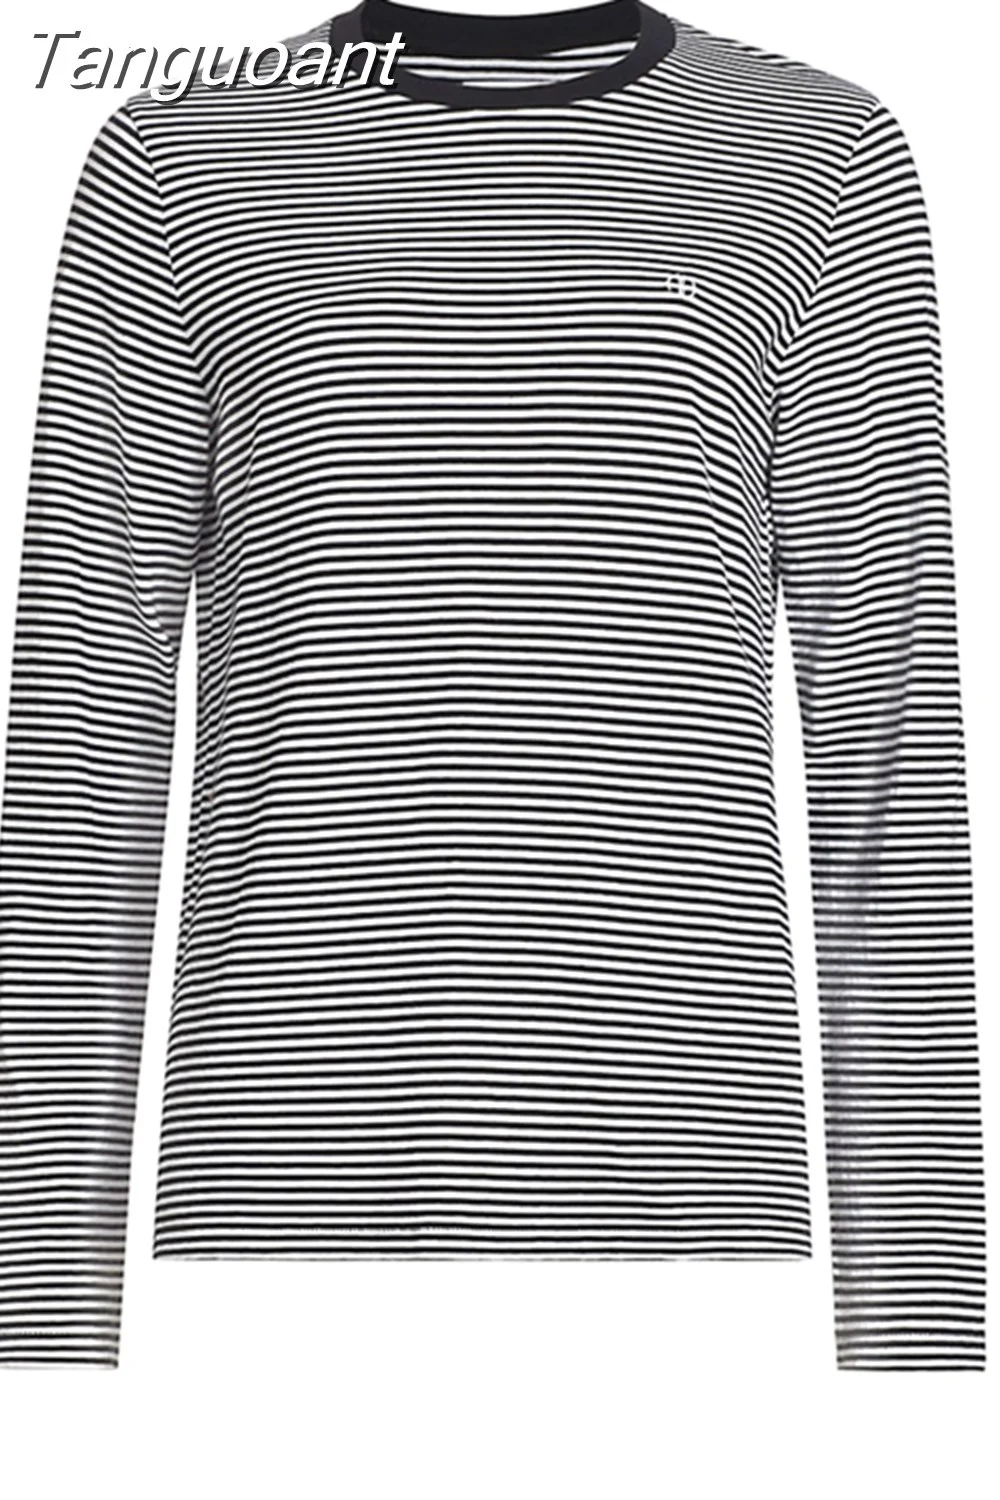 Tanguoant Logo Embroidery T-Shirt Women 2023 Summer Clothing Long Sleeve Fashion Tee Shirt T-Shirts Womens Tees Tops Streetwear